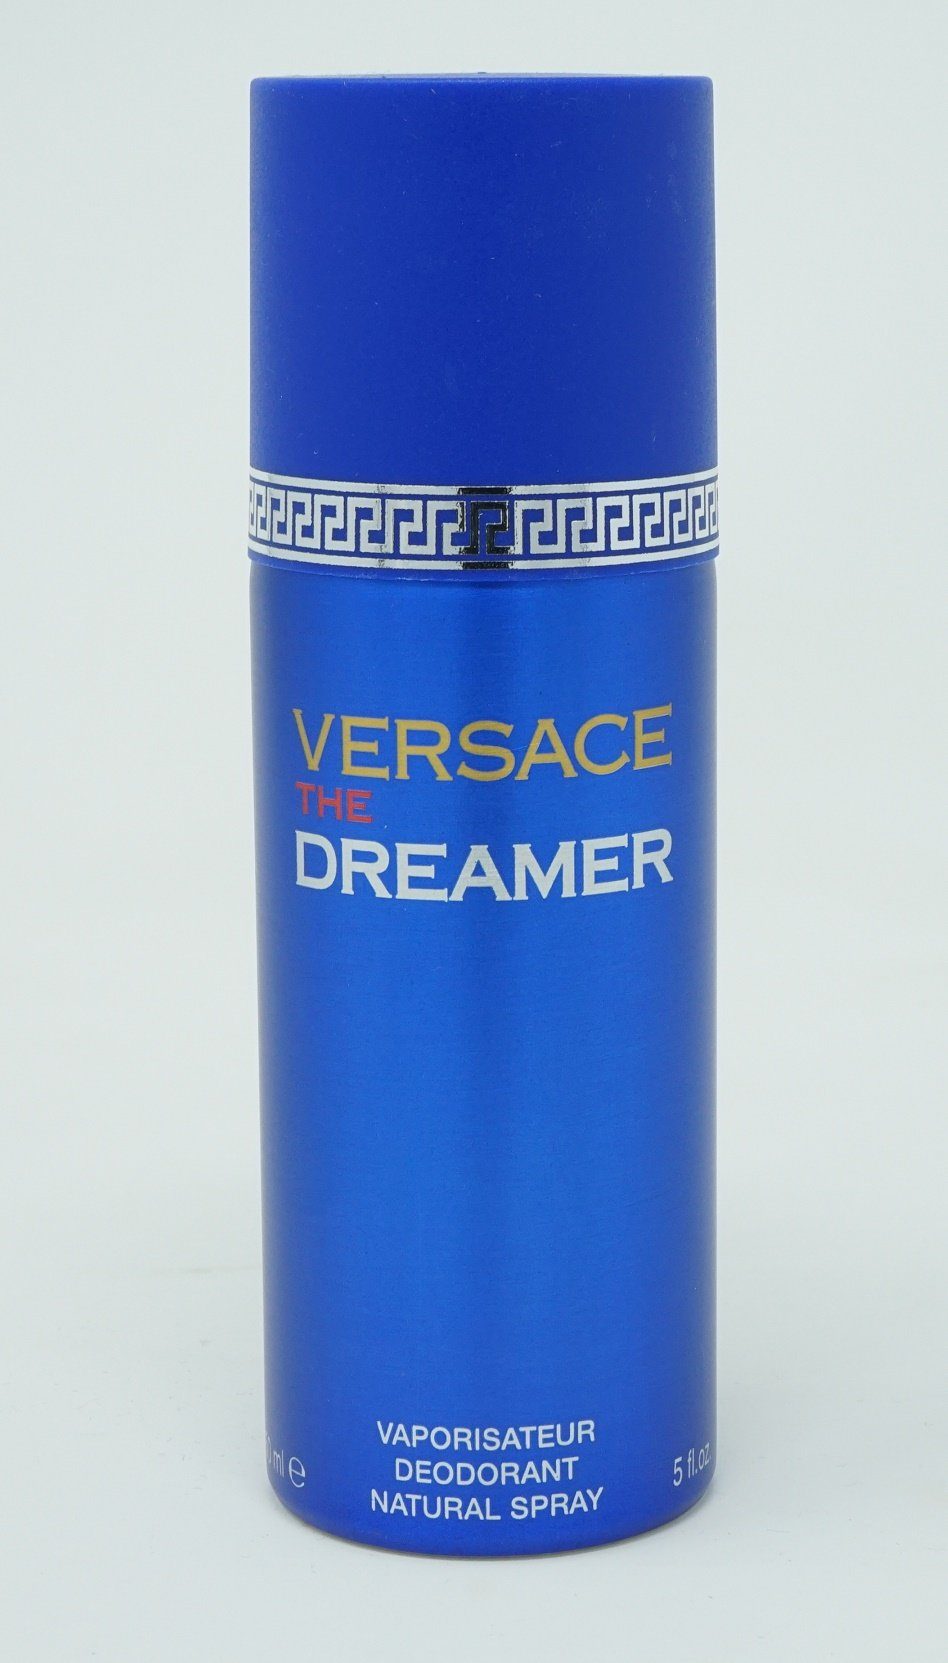 Versace Körperspray Versace The Dreamer Vapo Deodorant Spray 150ml